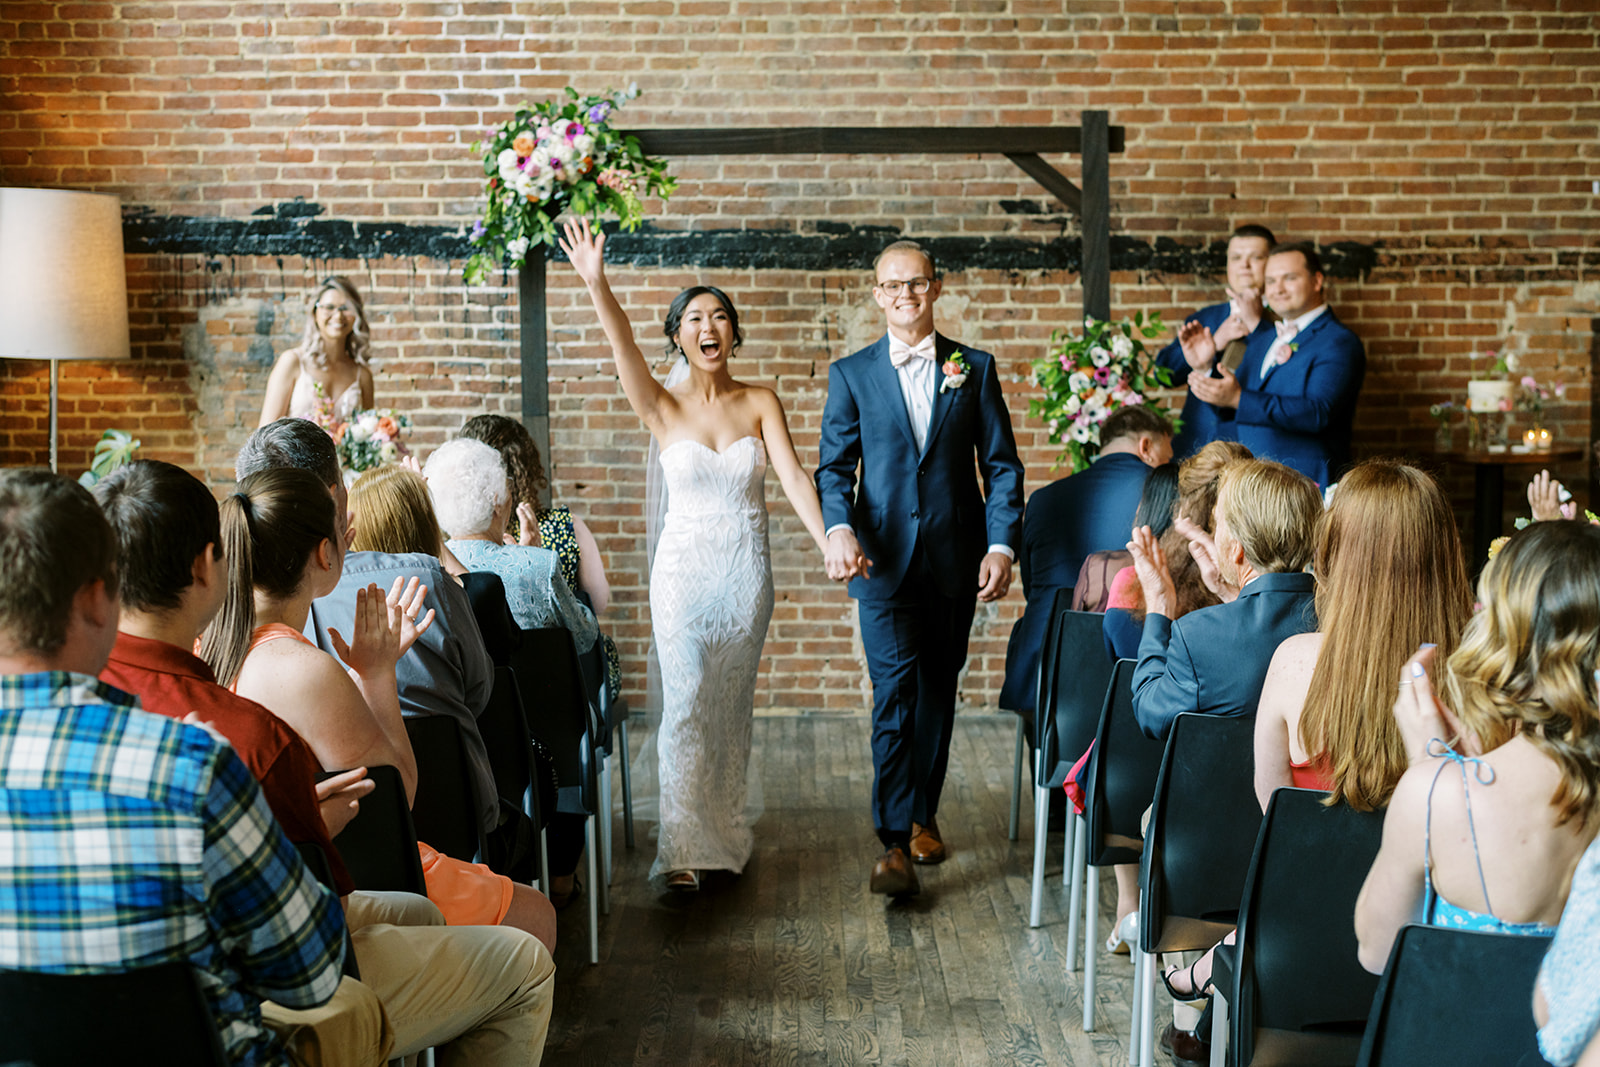 Laid back wedding at Aster downtown Cincinnati